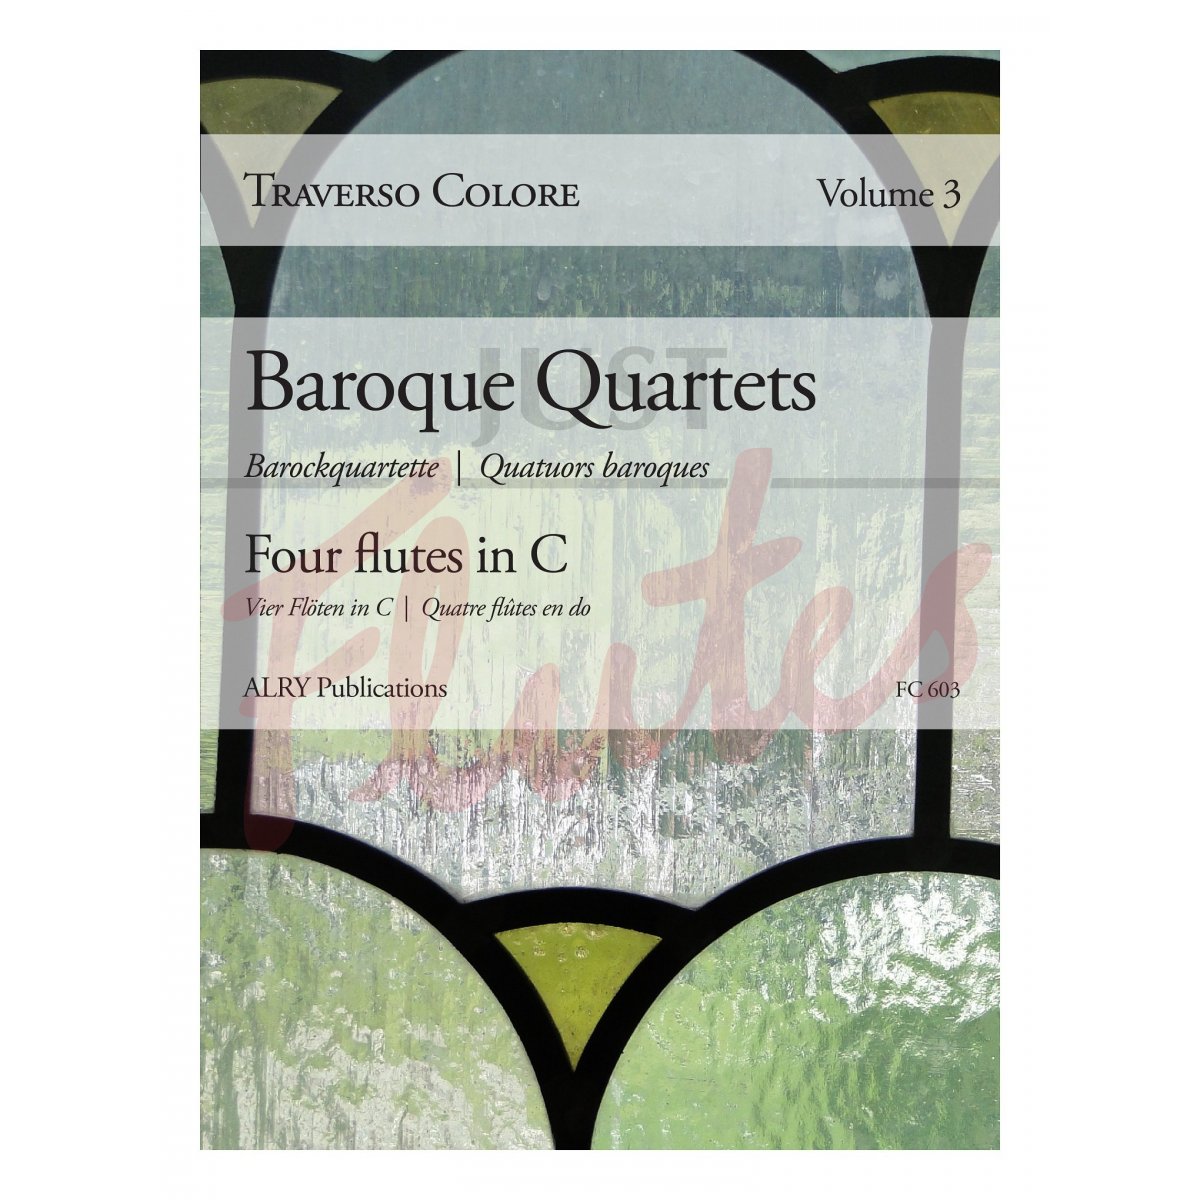 Traverso Colore, Volume 3 - Baroque Quartets [Flutes]